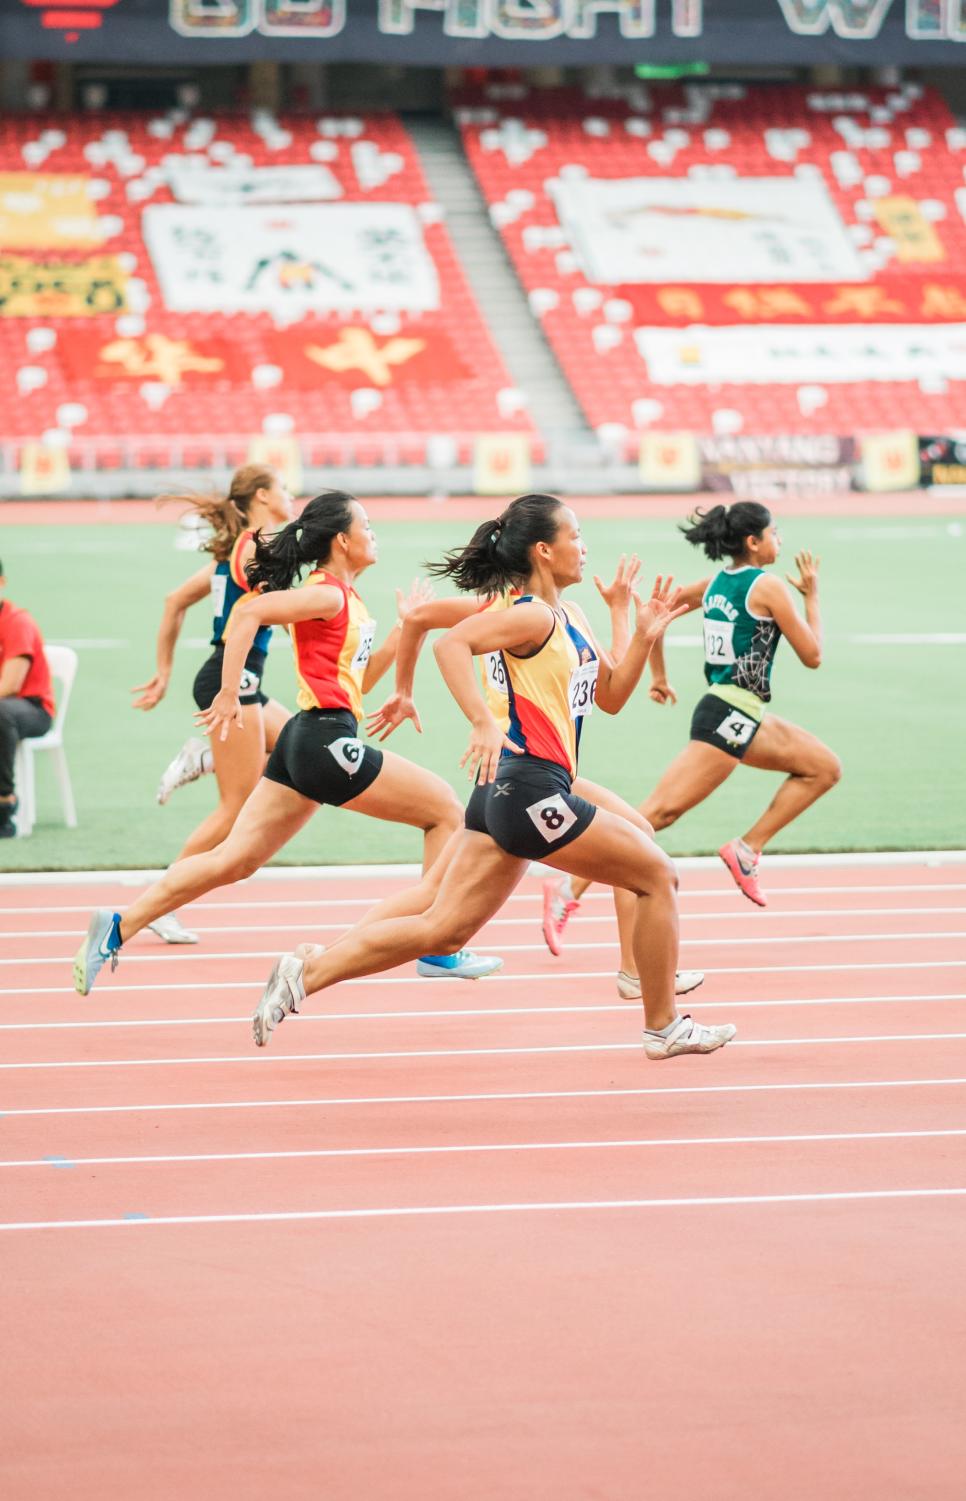 Women running on a track.